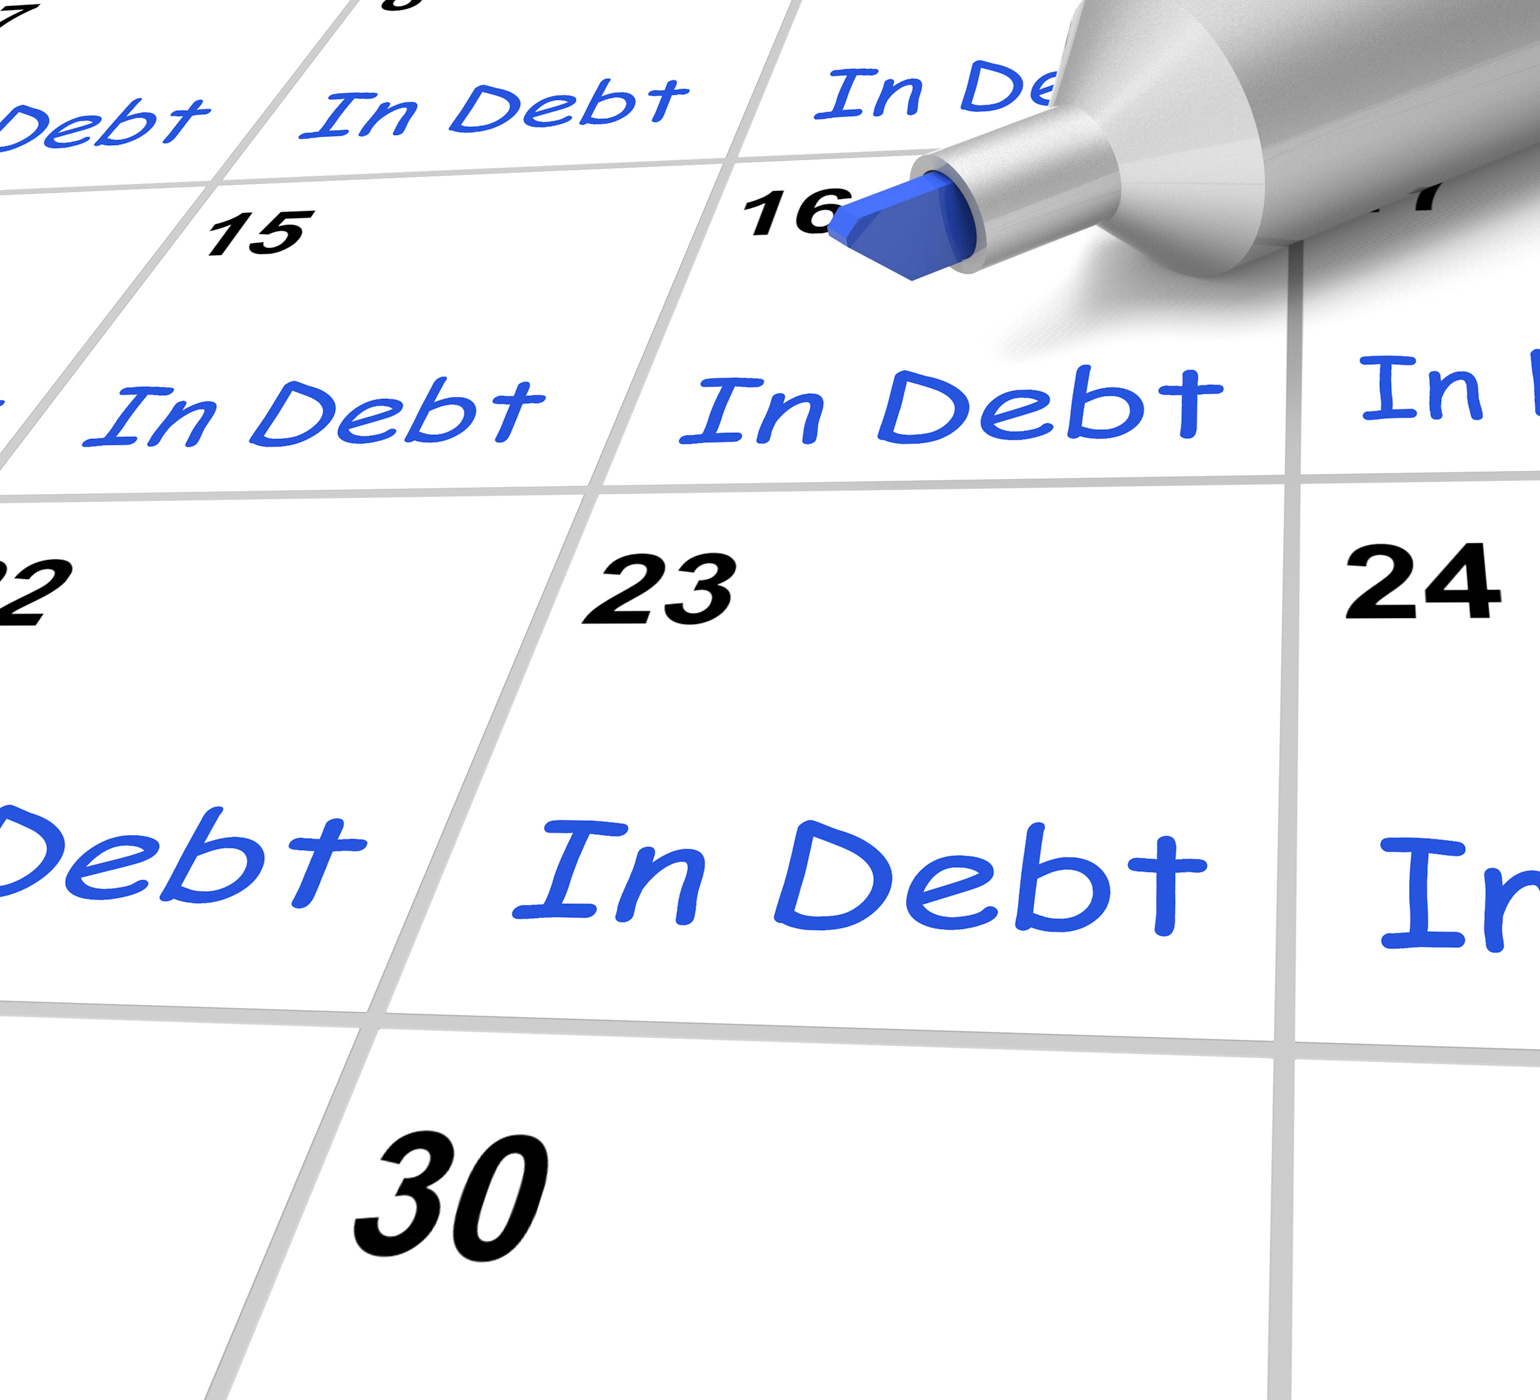 In debt calendar shows borrowed money owed photo